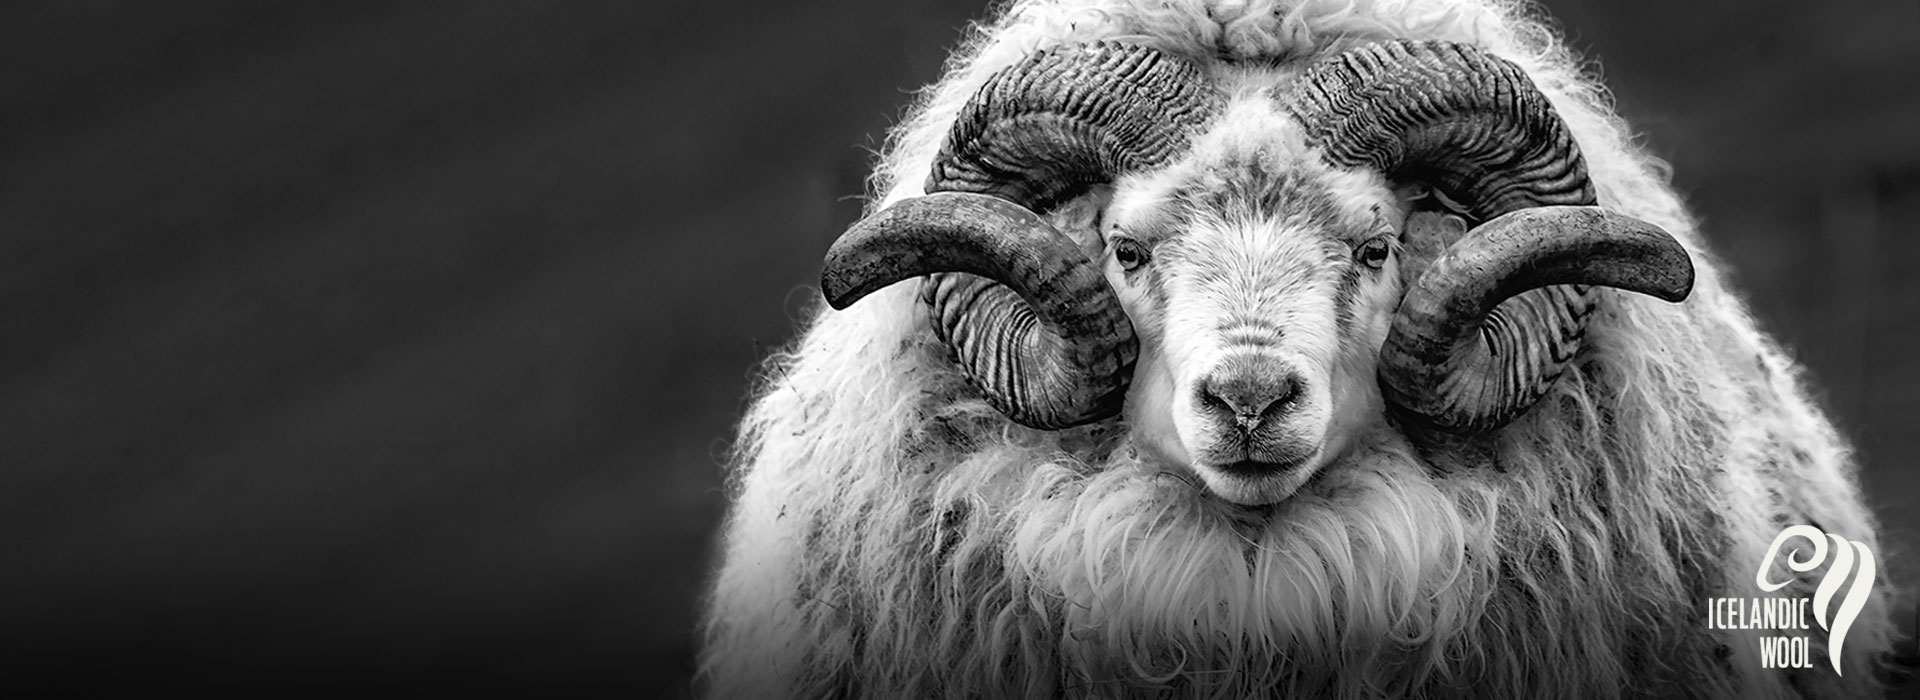 Icelandic wool insulation